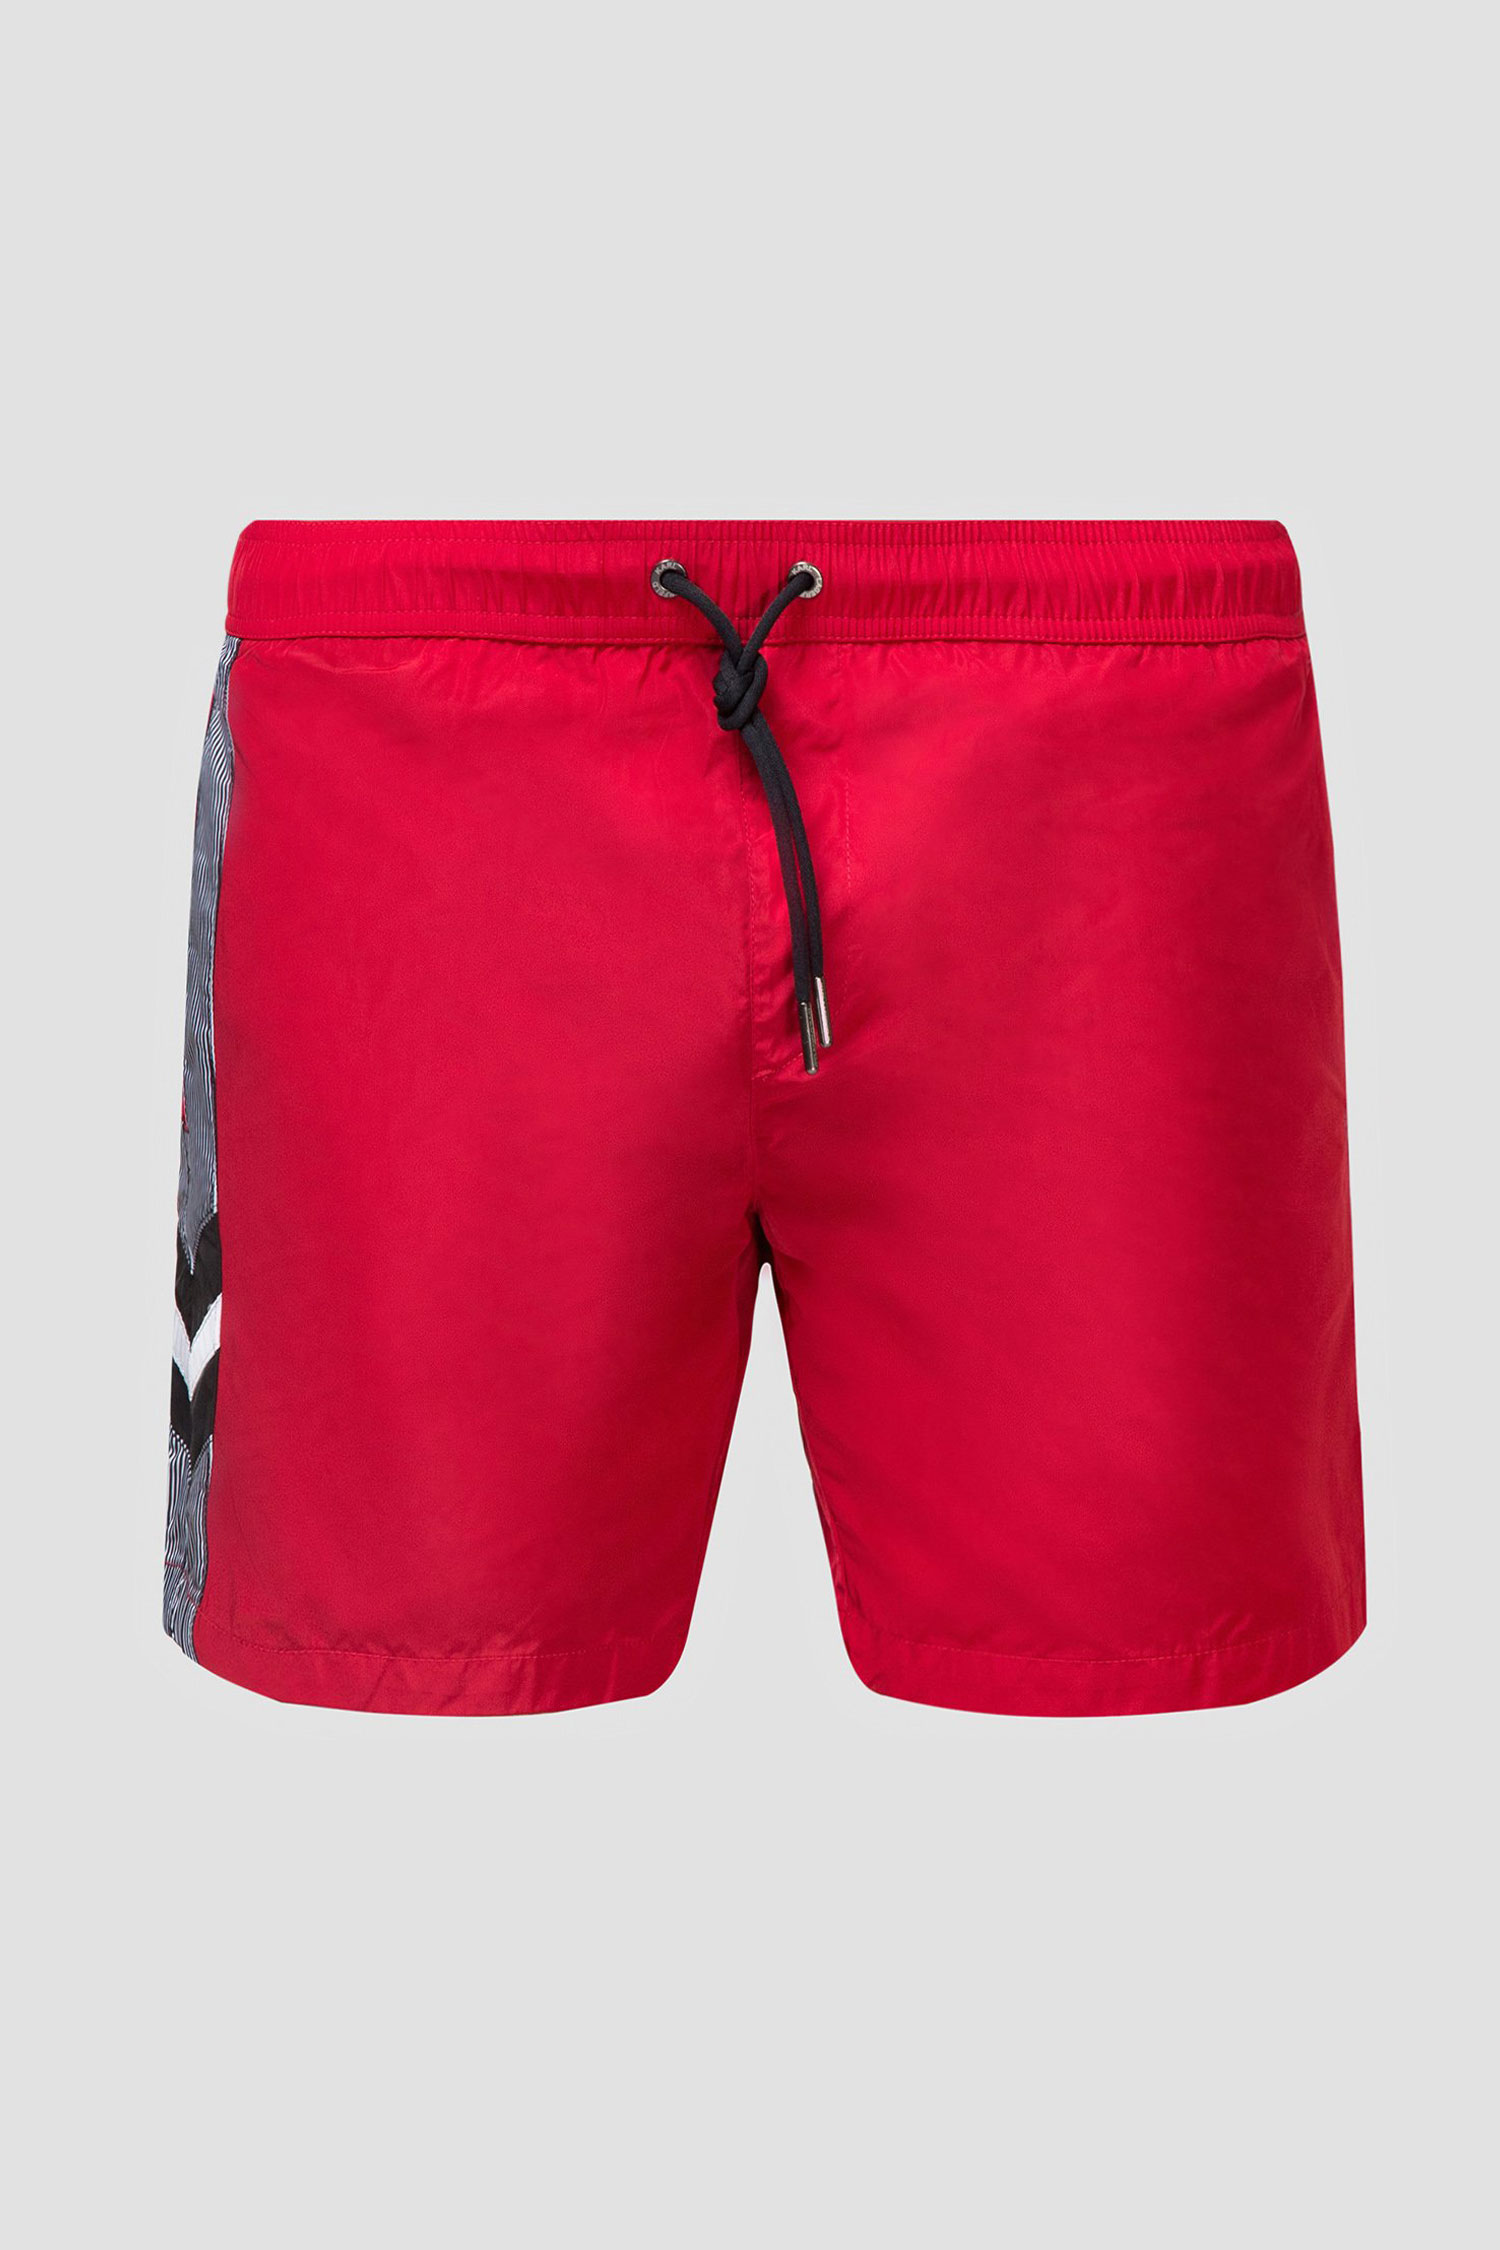 Мужские красные плавательные шорты Karl Lagerfeld KL20MBM07;Red